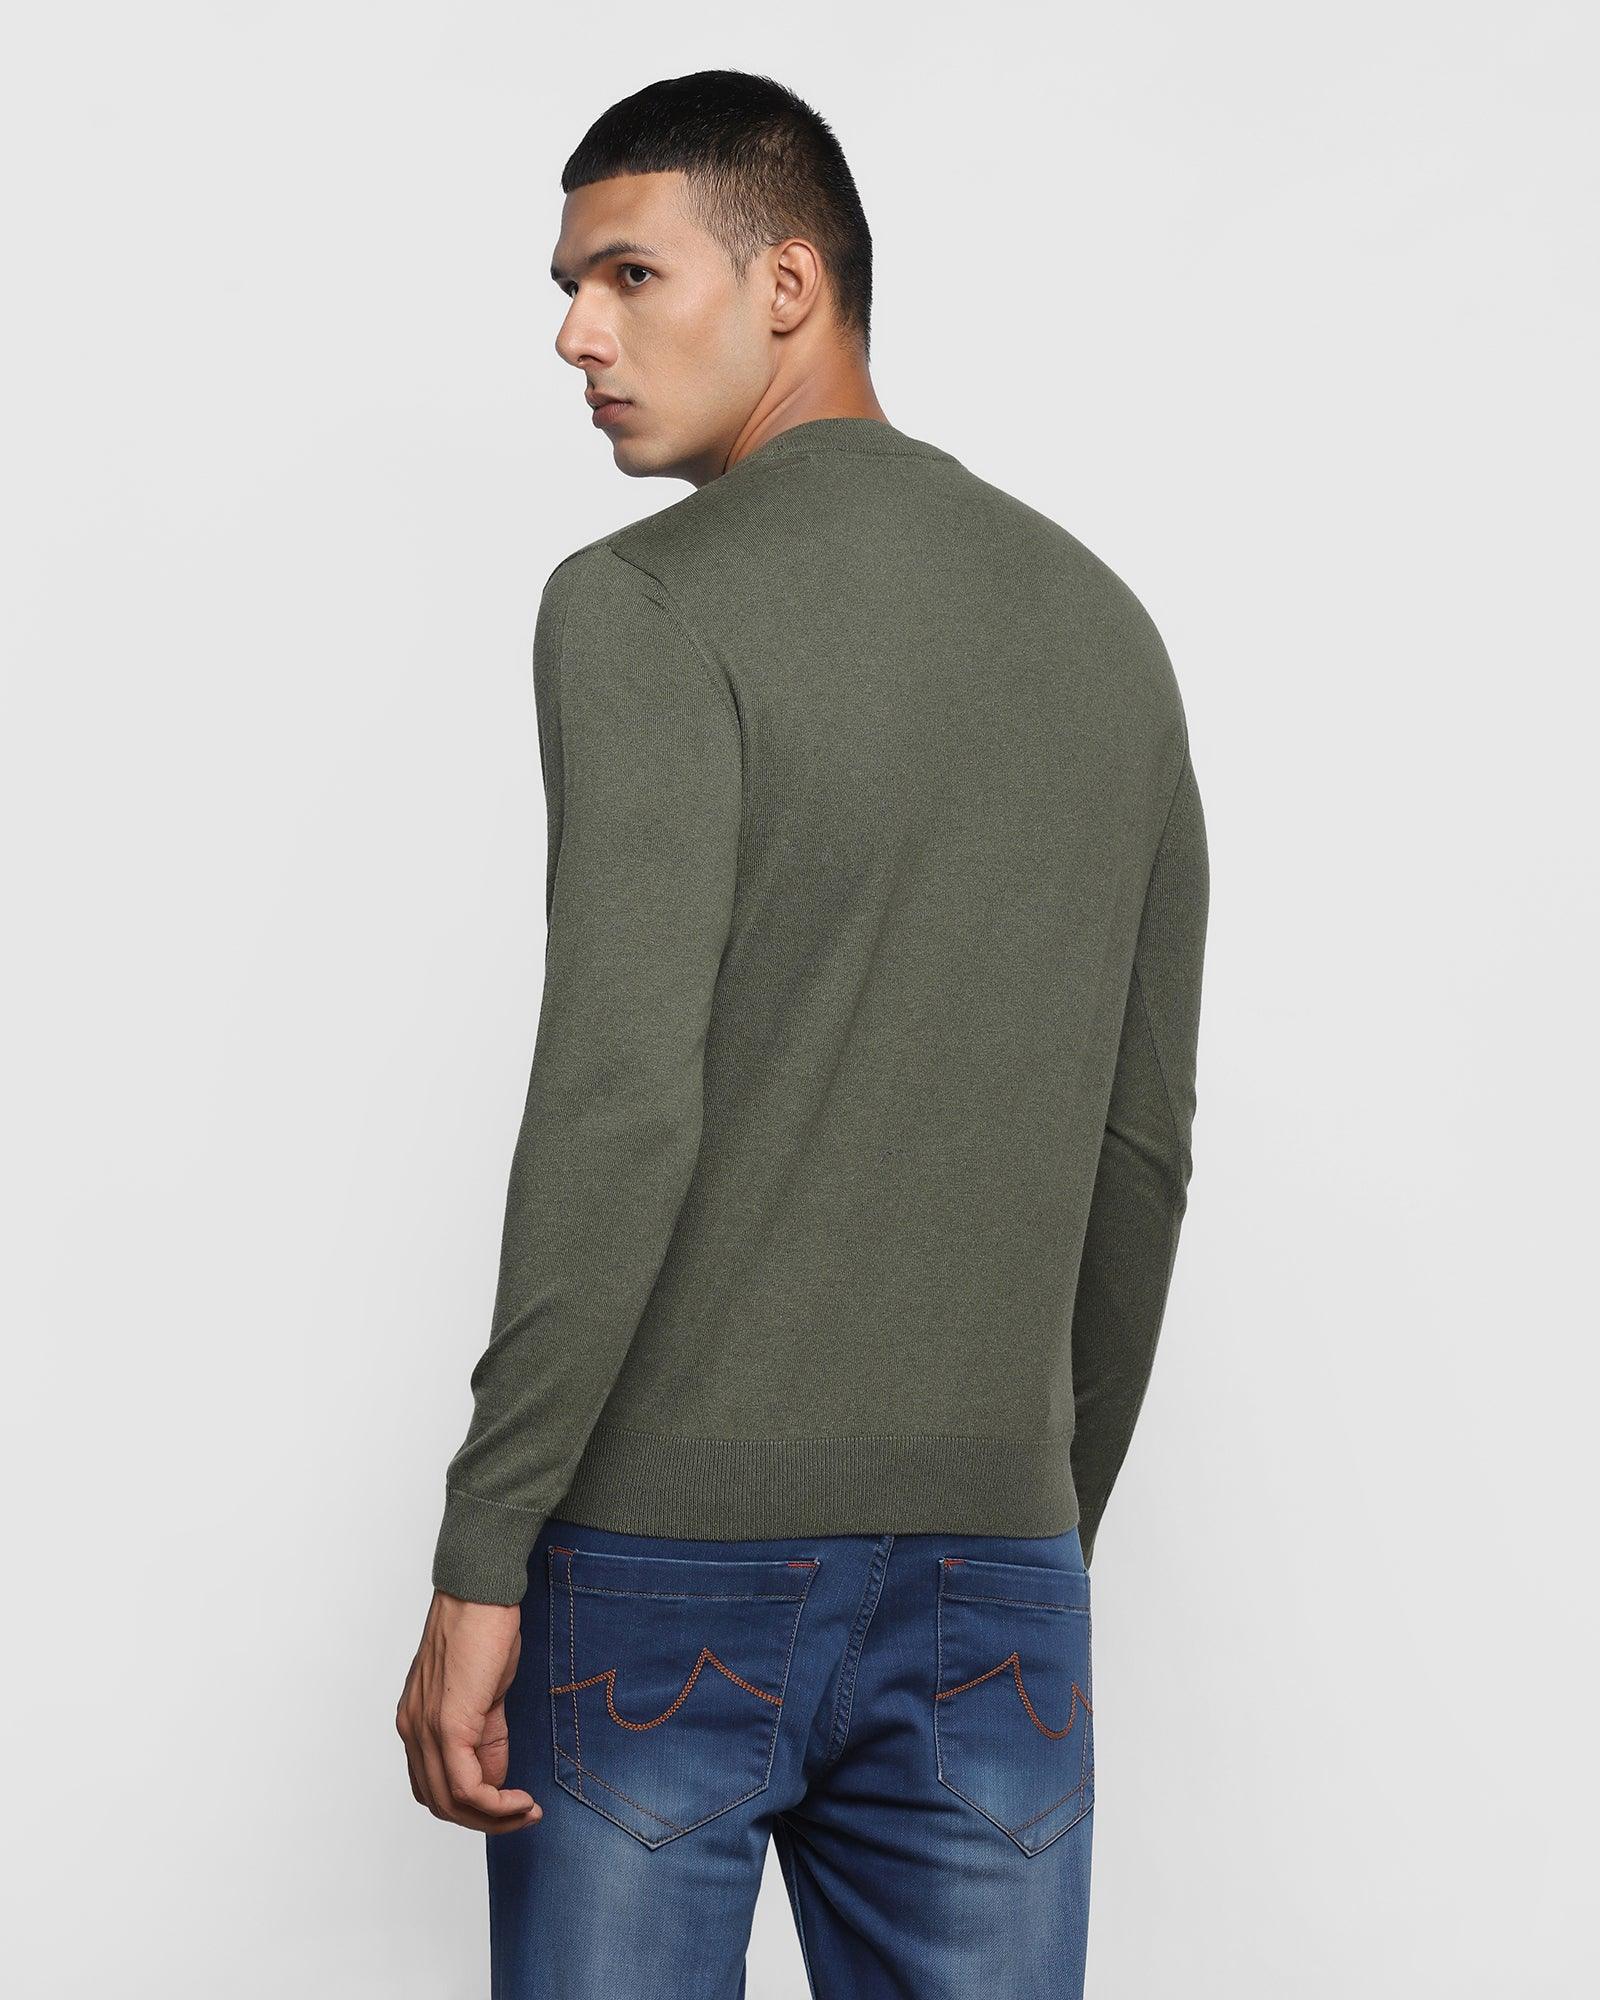 Crew Neck Olive Solid Sweater - Alex